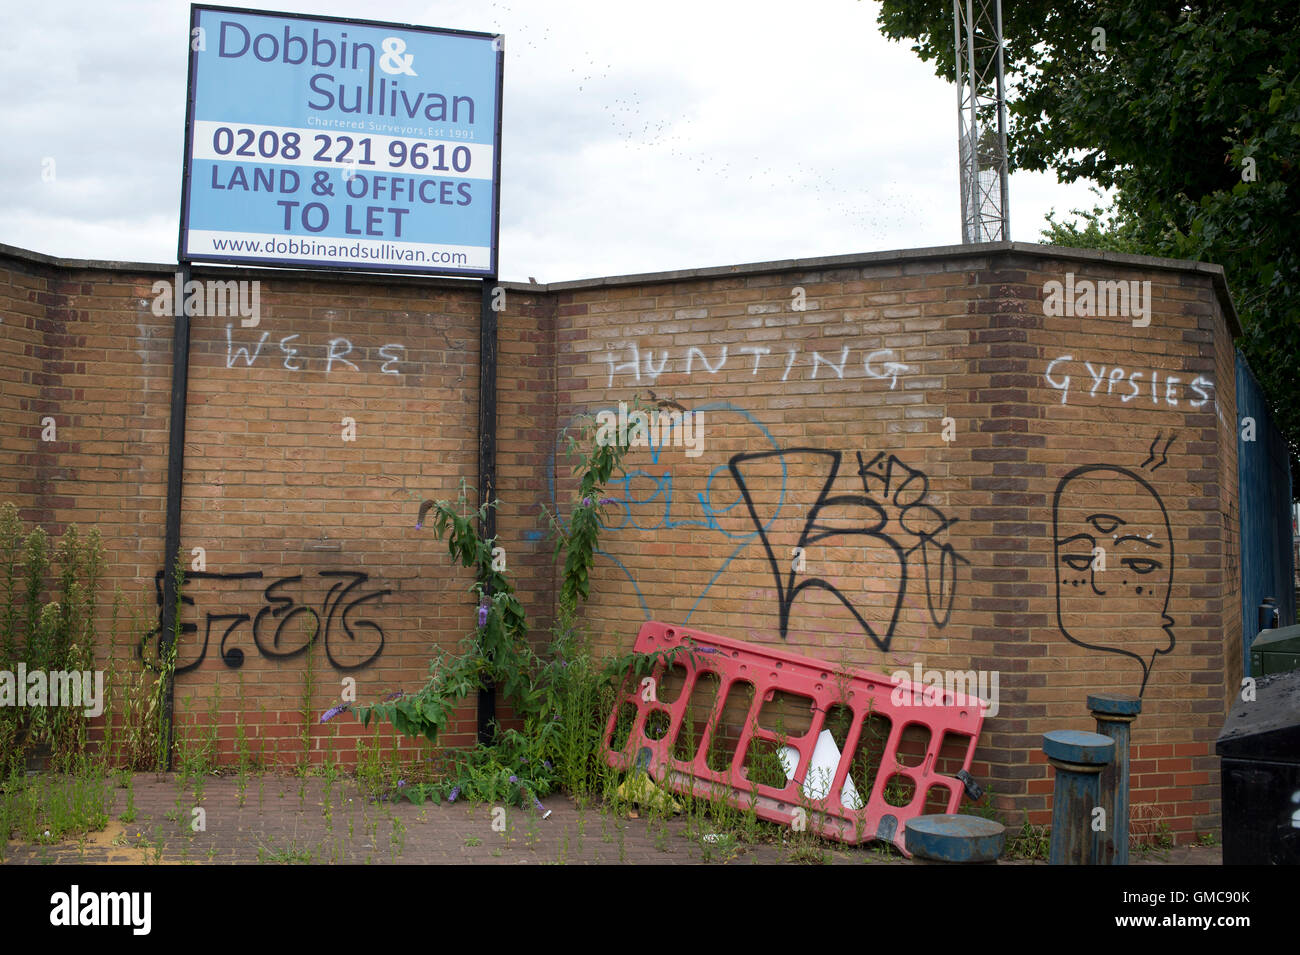 Hackney. Graffiti, die sagen: "Wir sind Jagd Zigeuner". Stockfoto